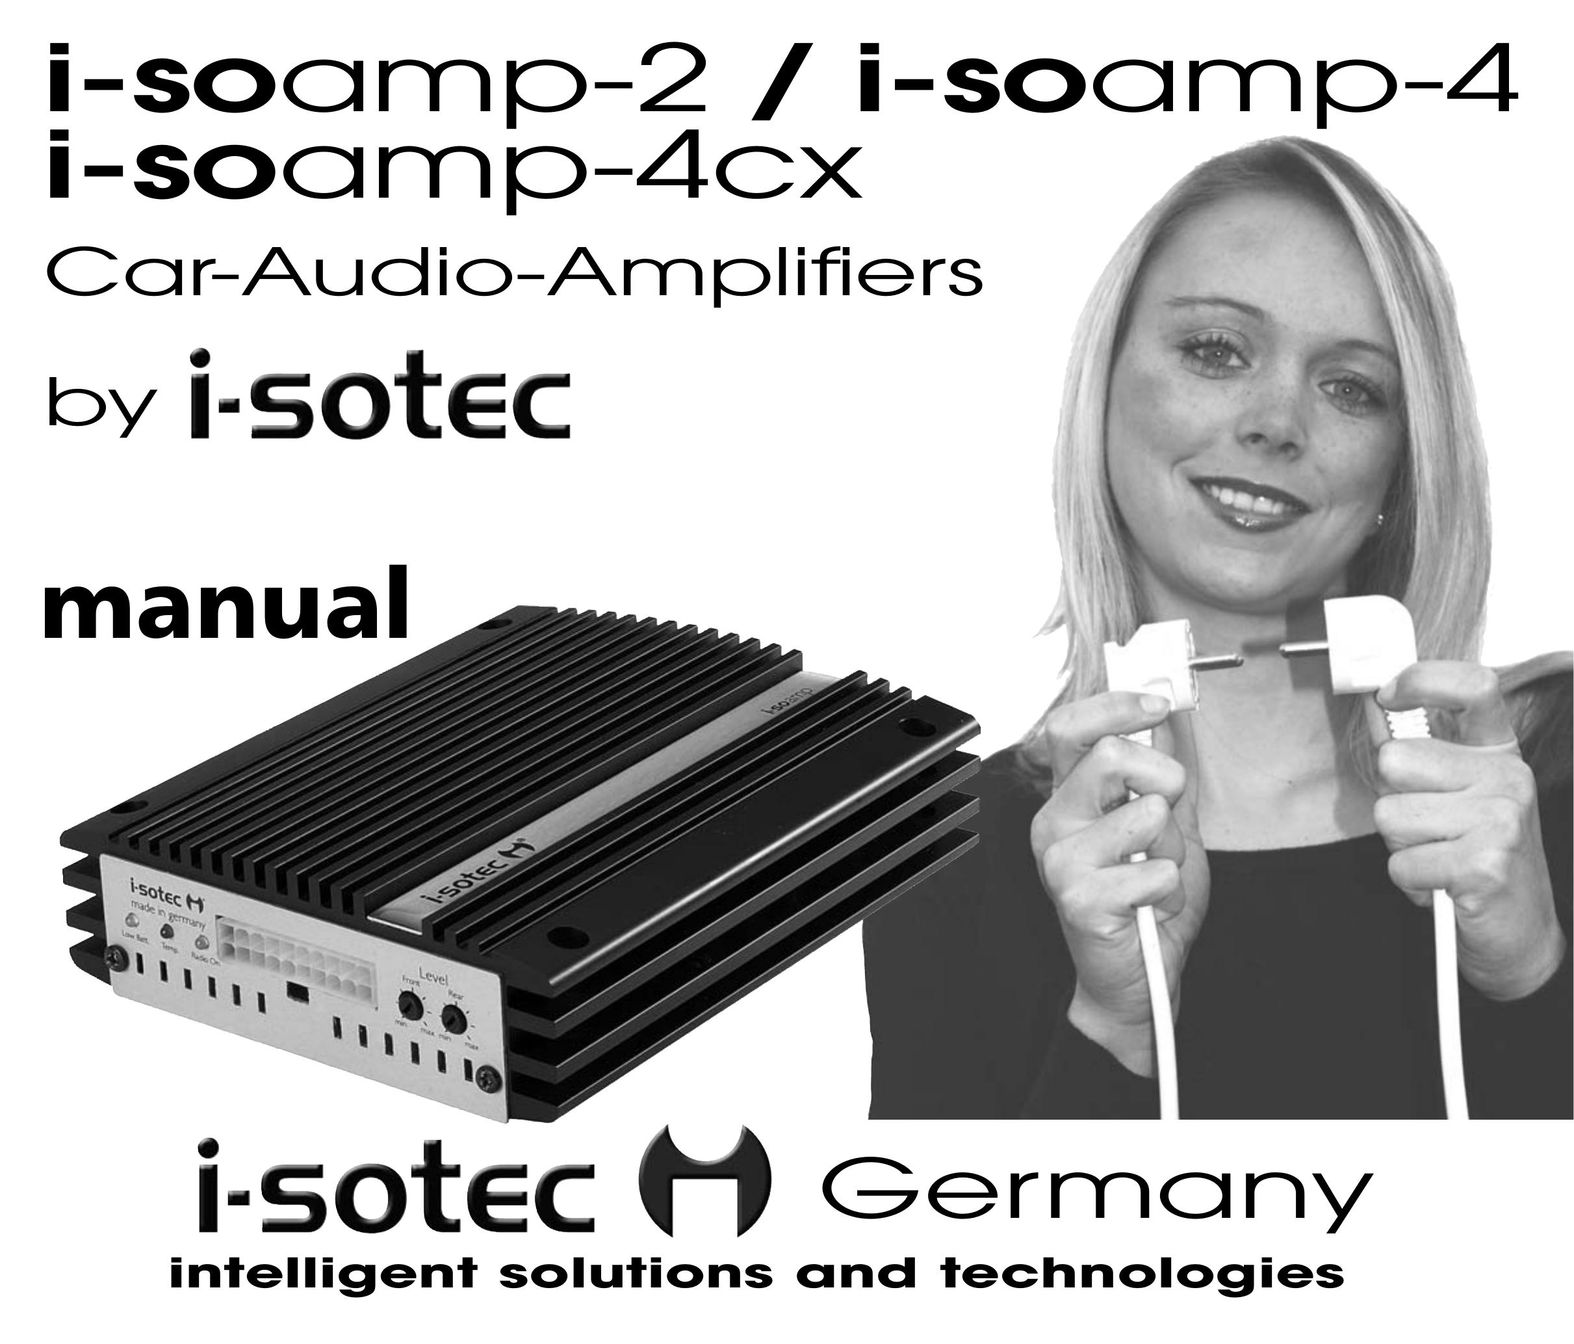 Braun i-soamp-4cx Car Amplifier User Manual